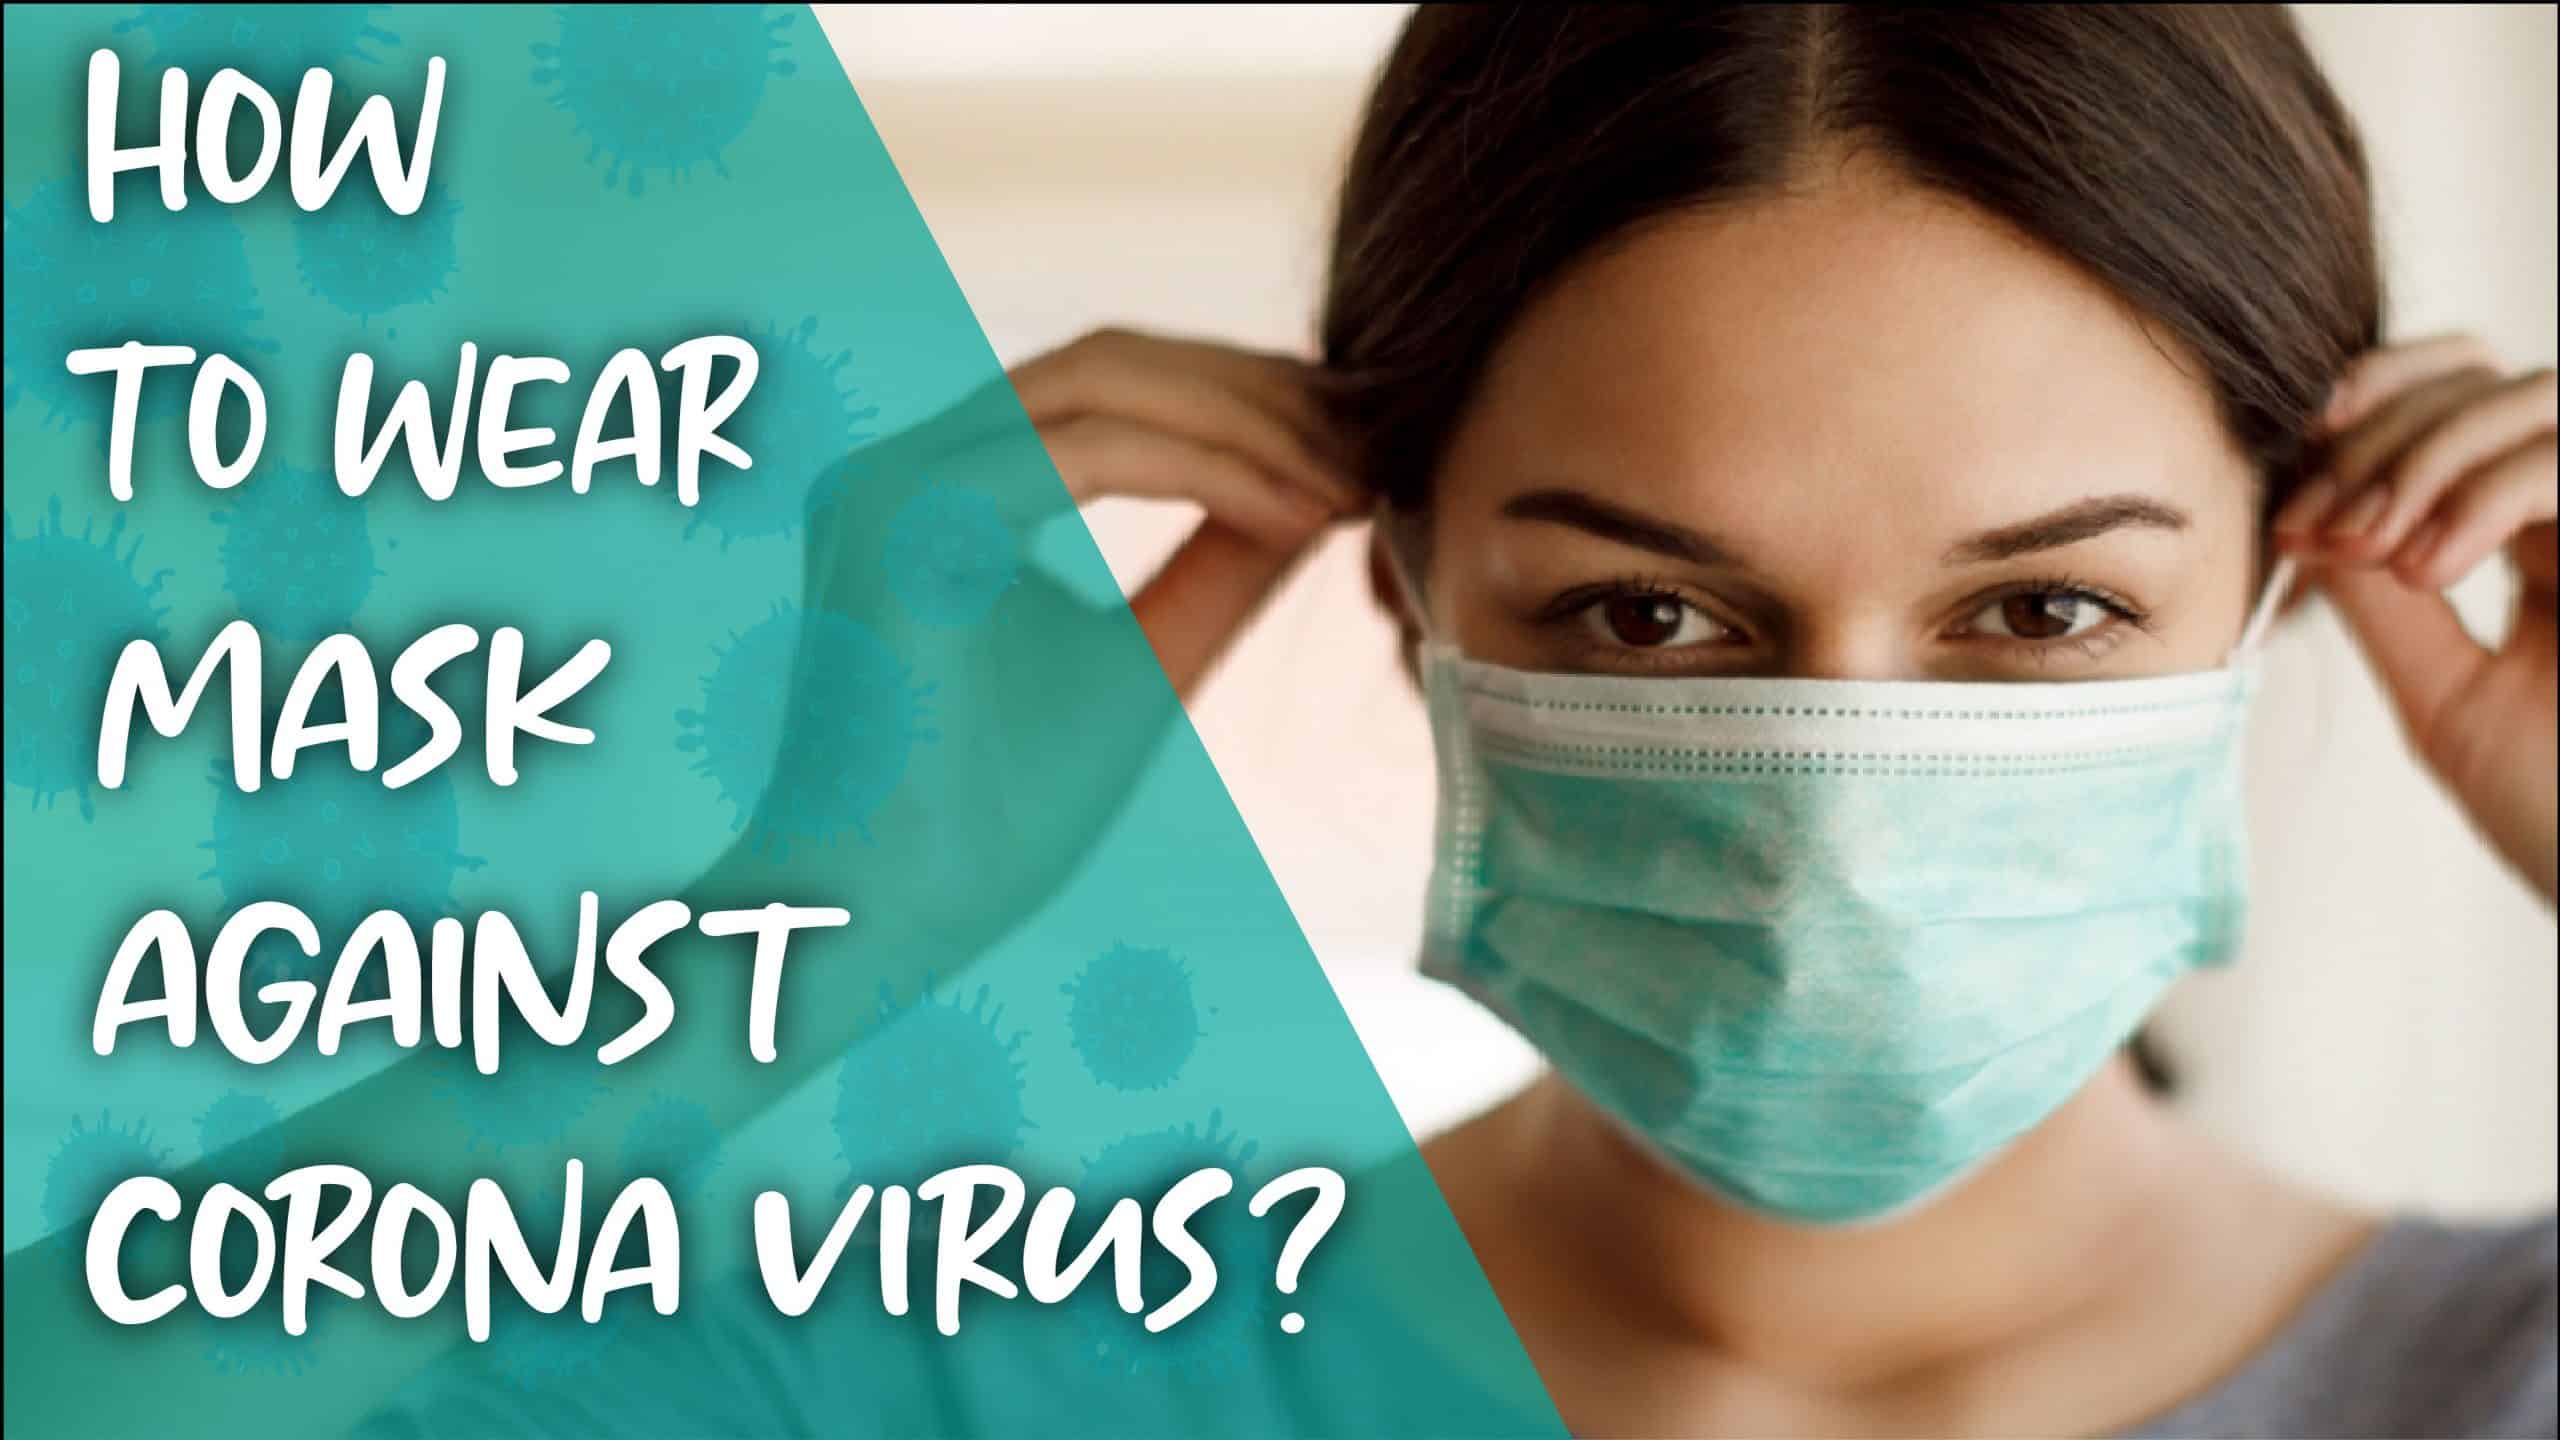 how to wear mask against the coronavirus?